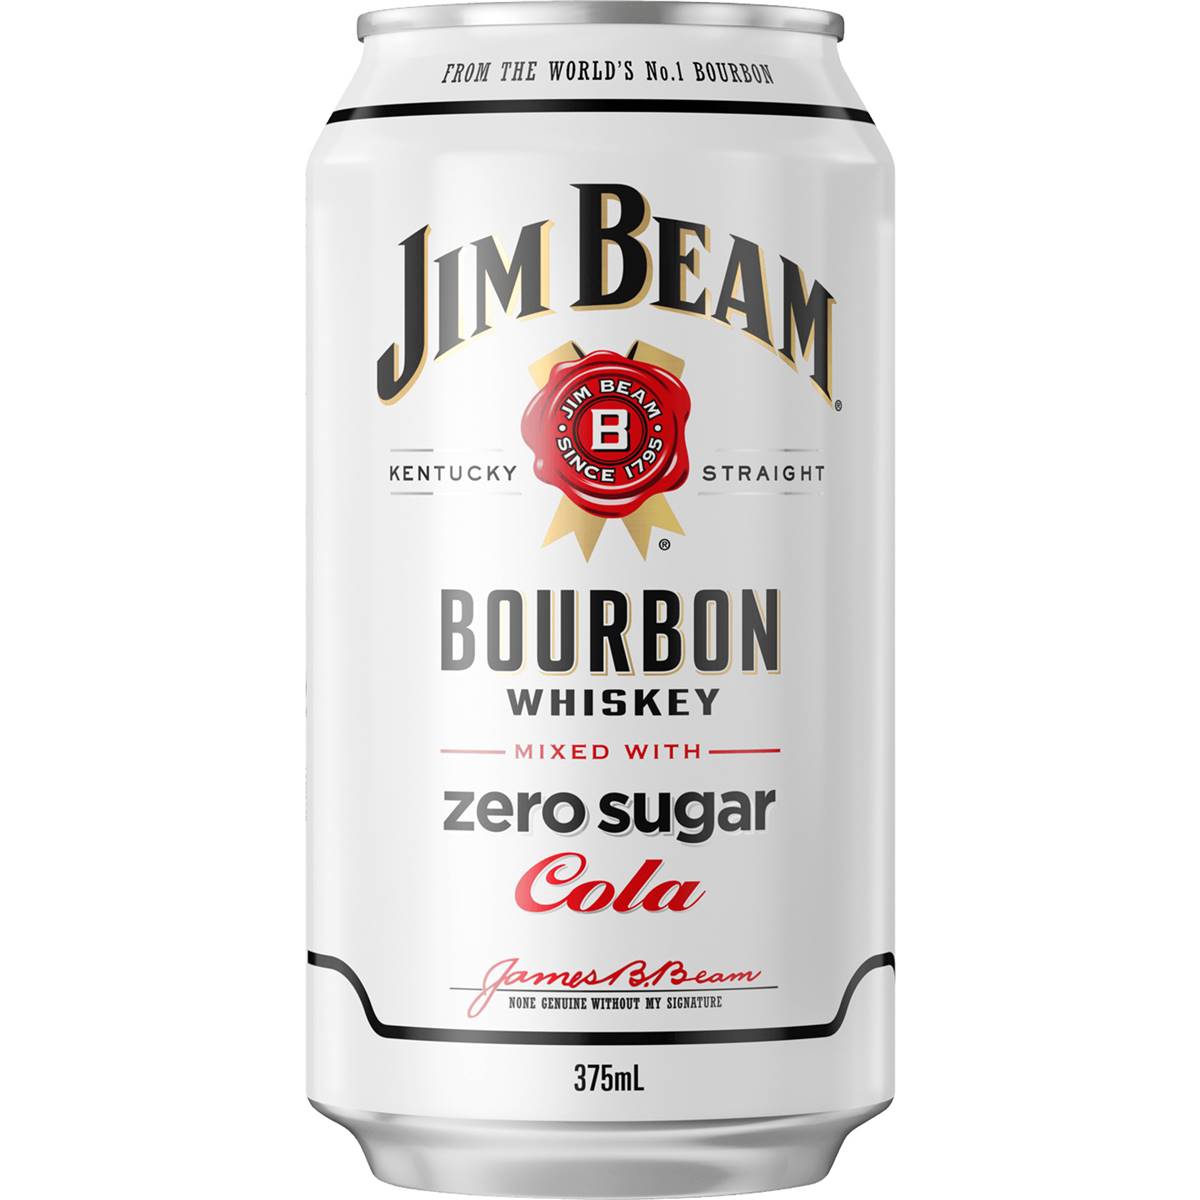 calories-in-jim-beam-bourbon-zero-sugar-cola-cans-calcount